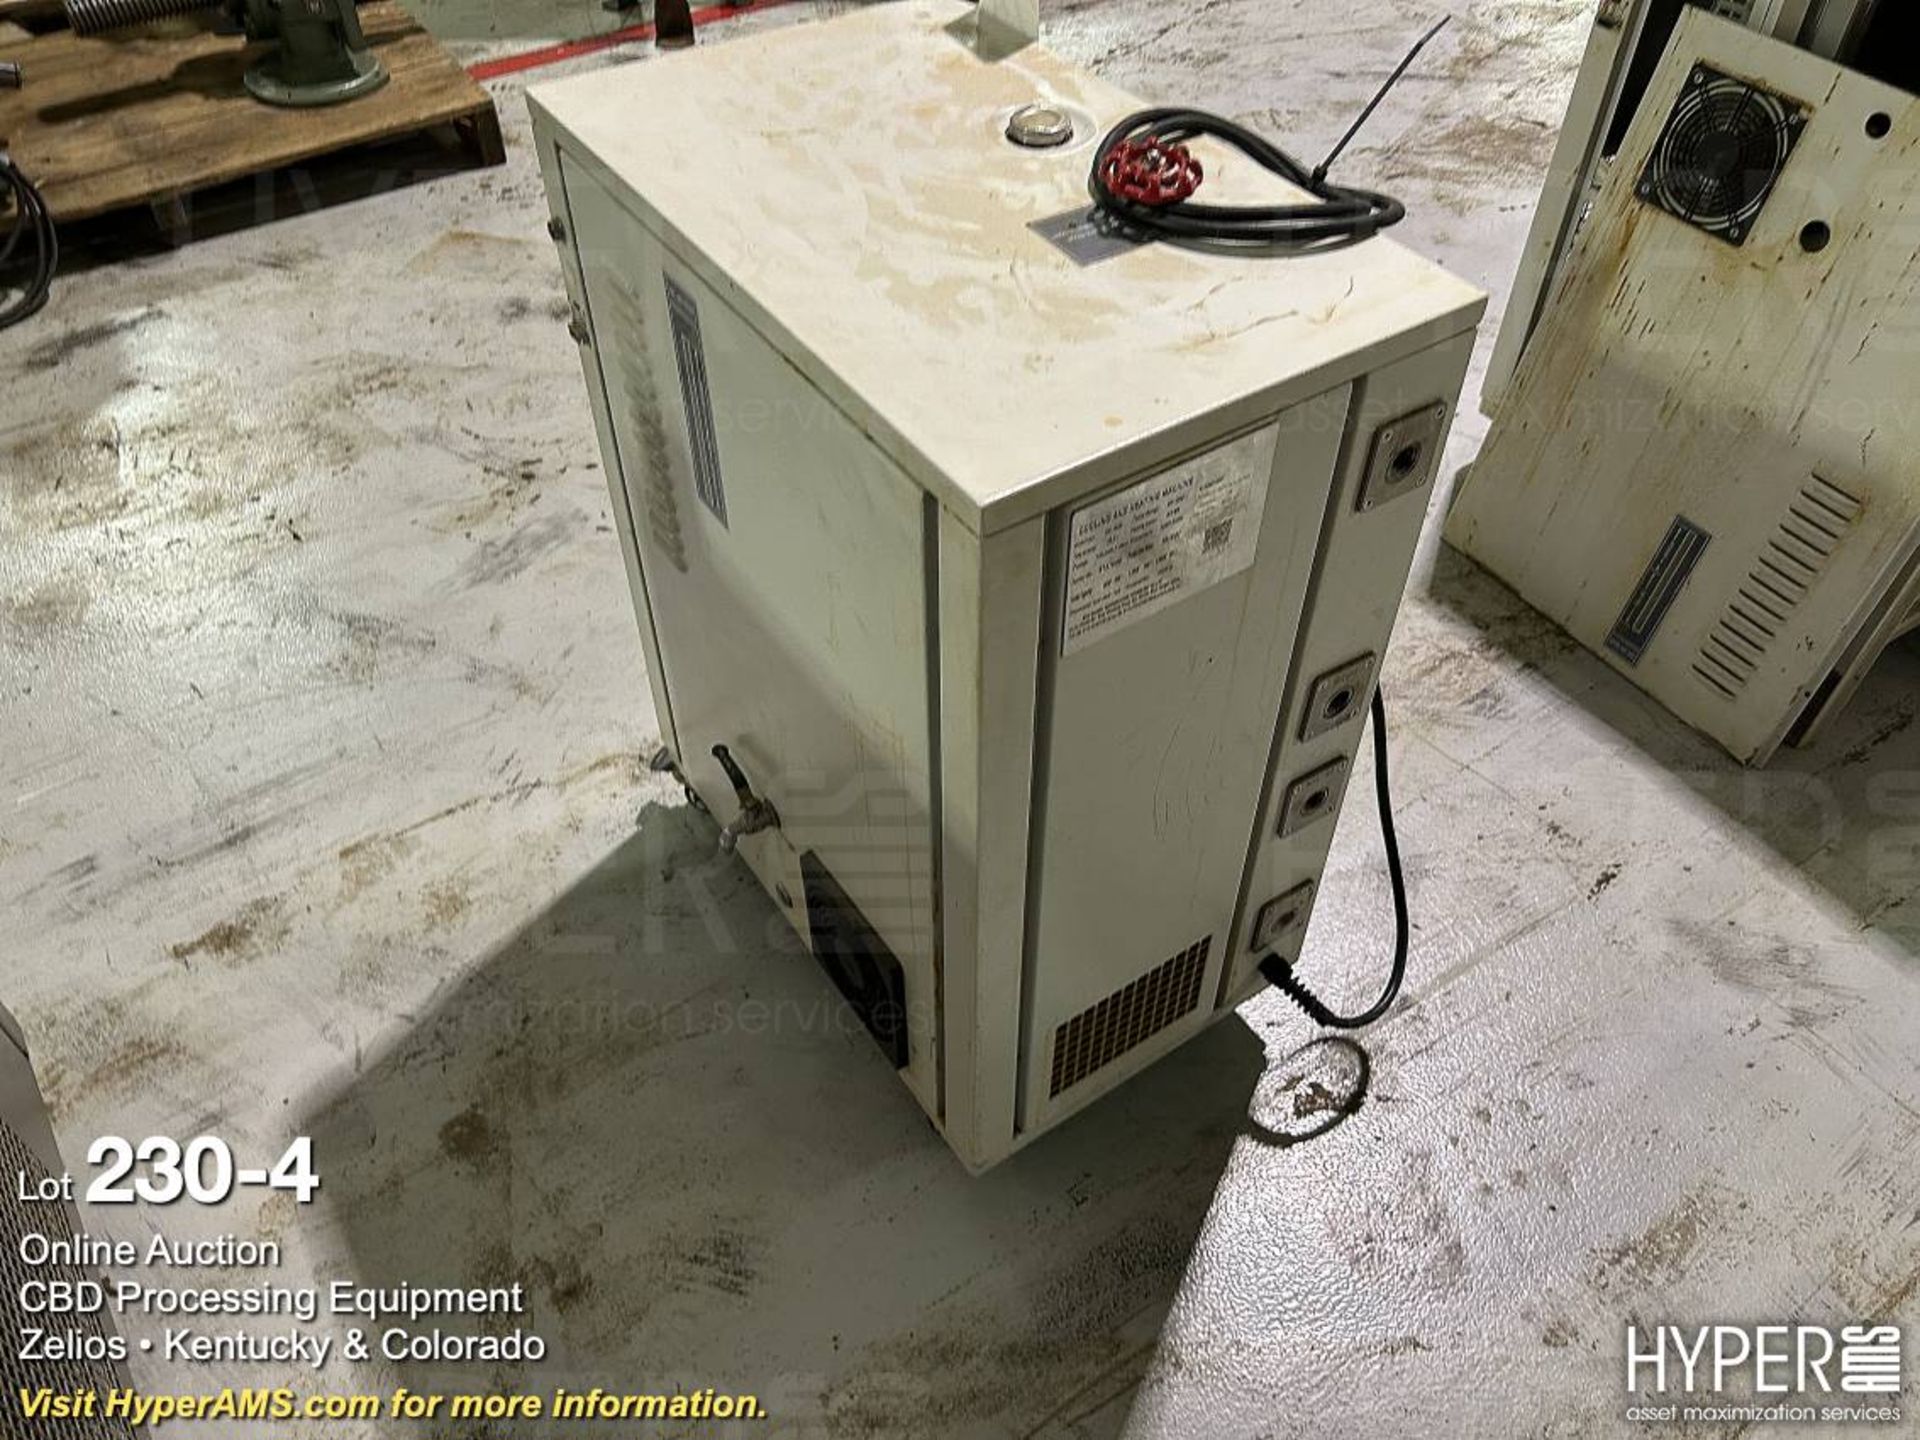 Lneya Model UC-182 Electric Chiller/Heater, S/n 81 - Image 4 of 4